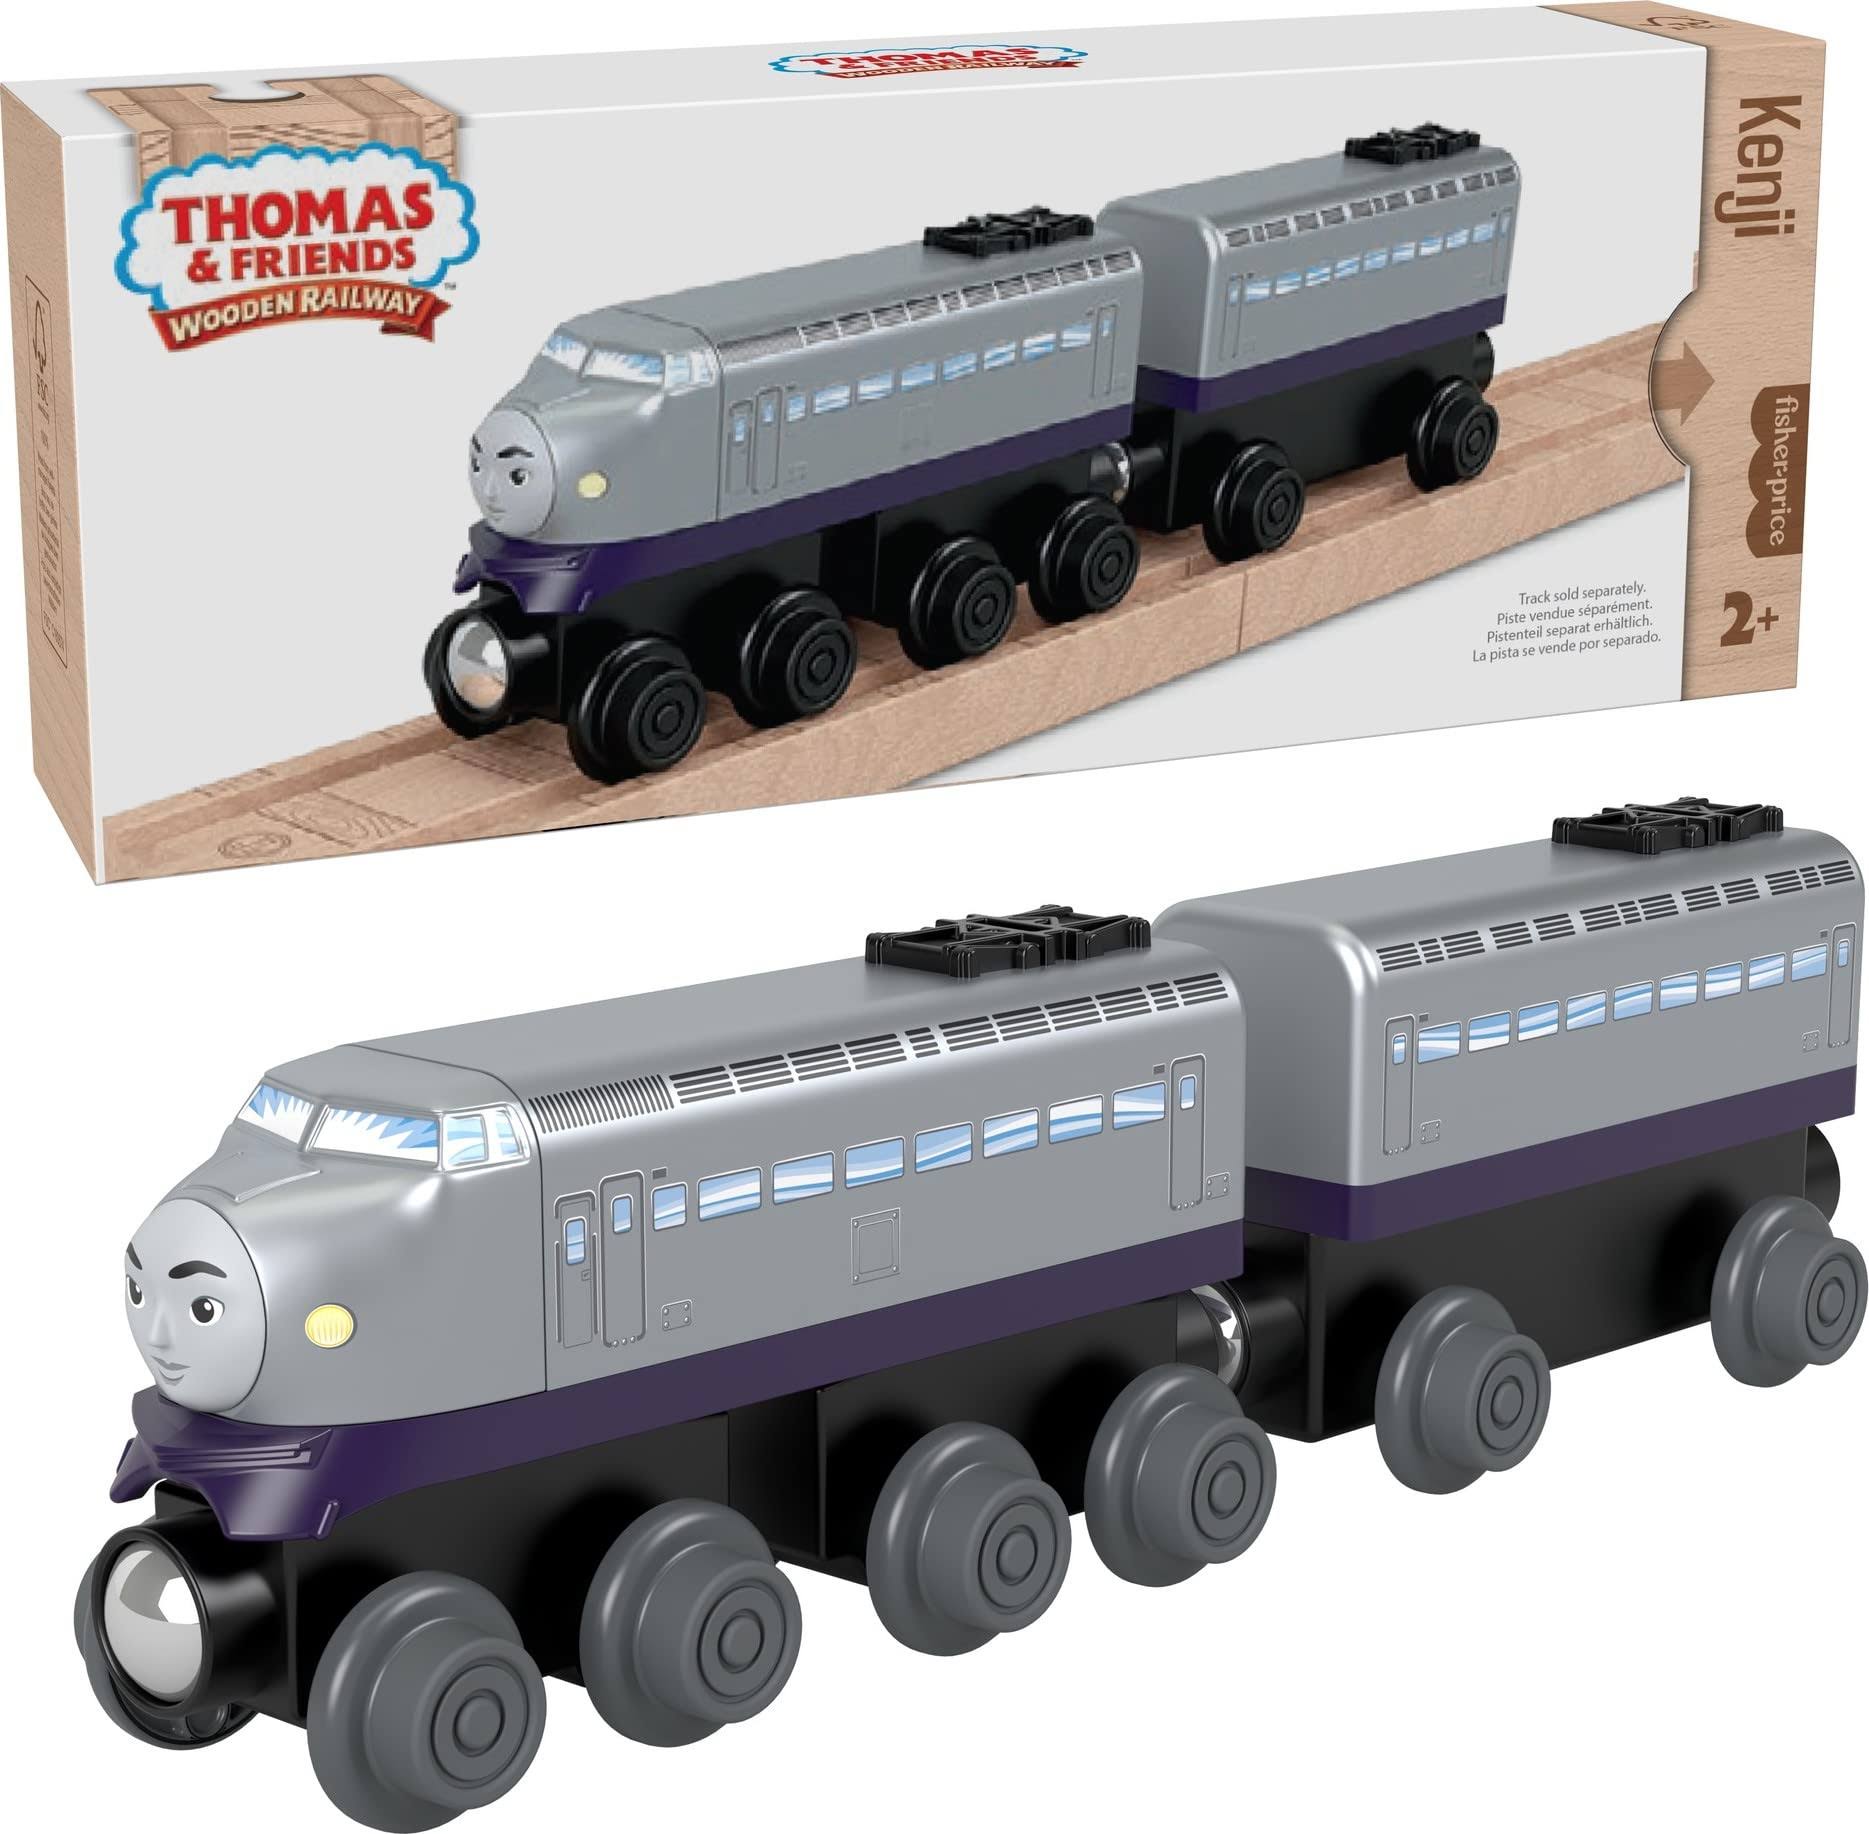 Thomas & Friends Wooden Railway Kenji Engine and Coal Car Push-Along